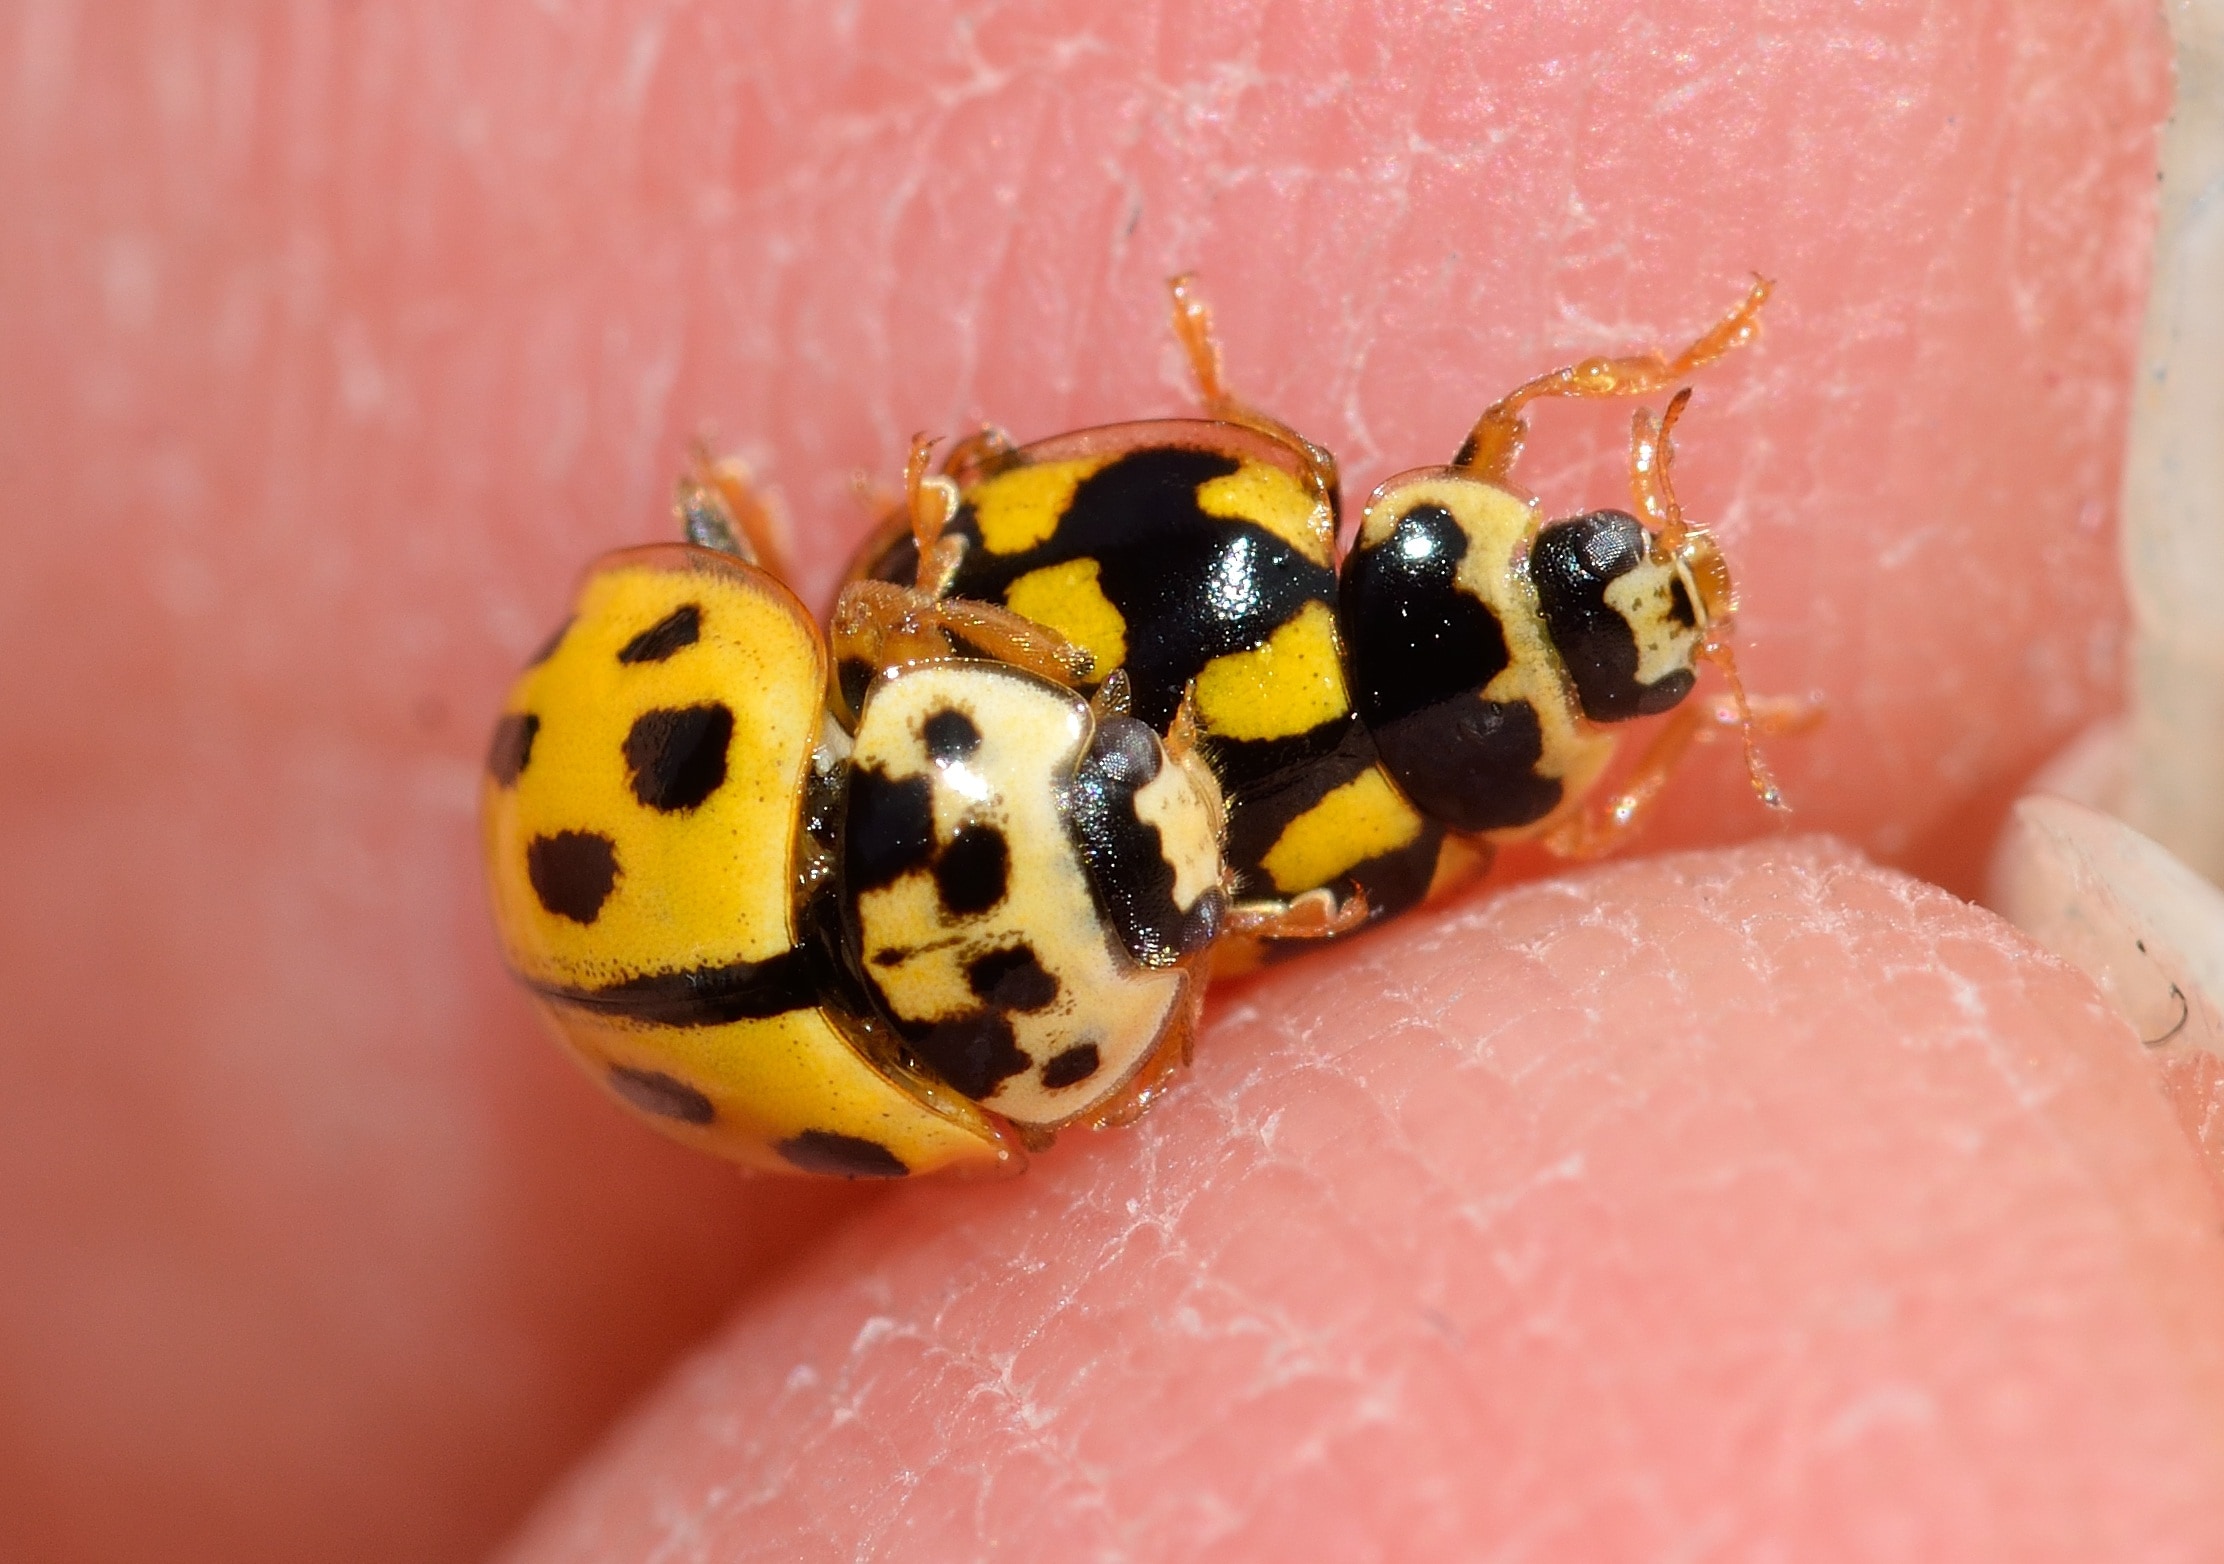 Ladybug, The Trilogy, one animal, animal themes